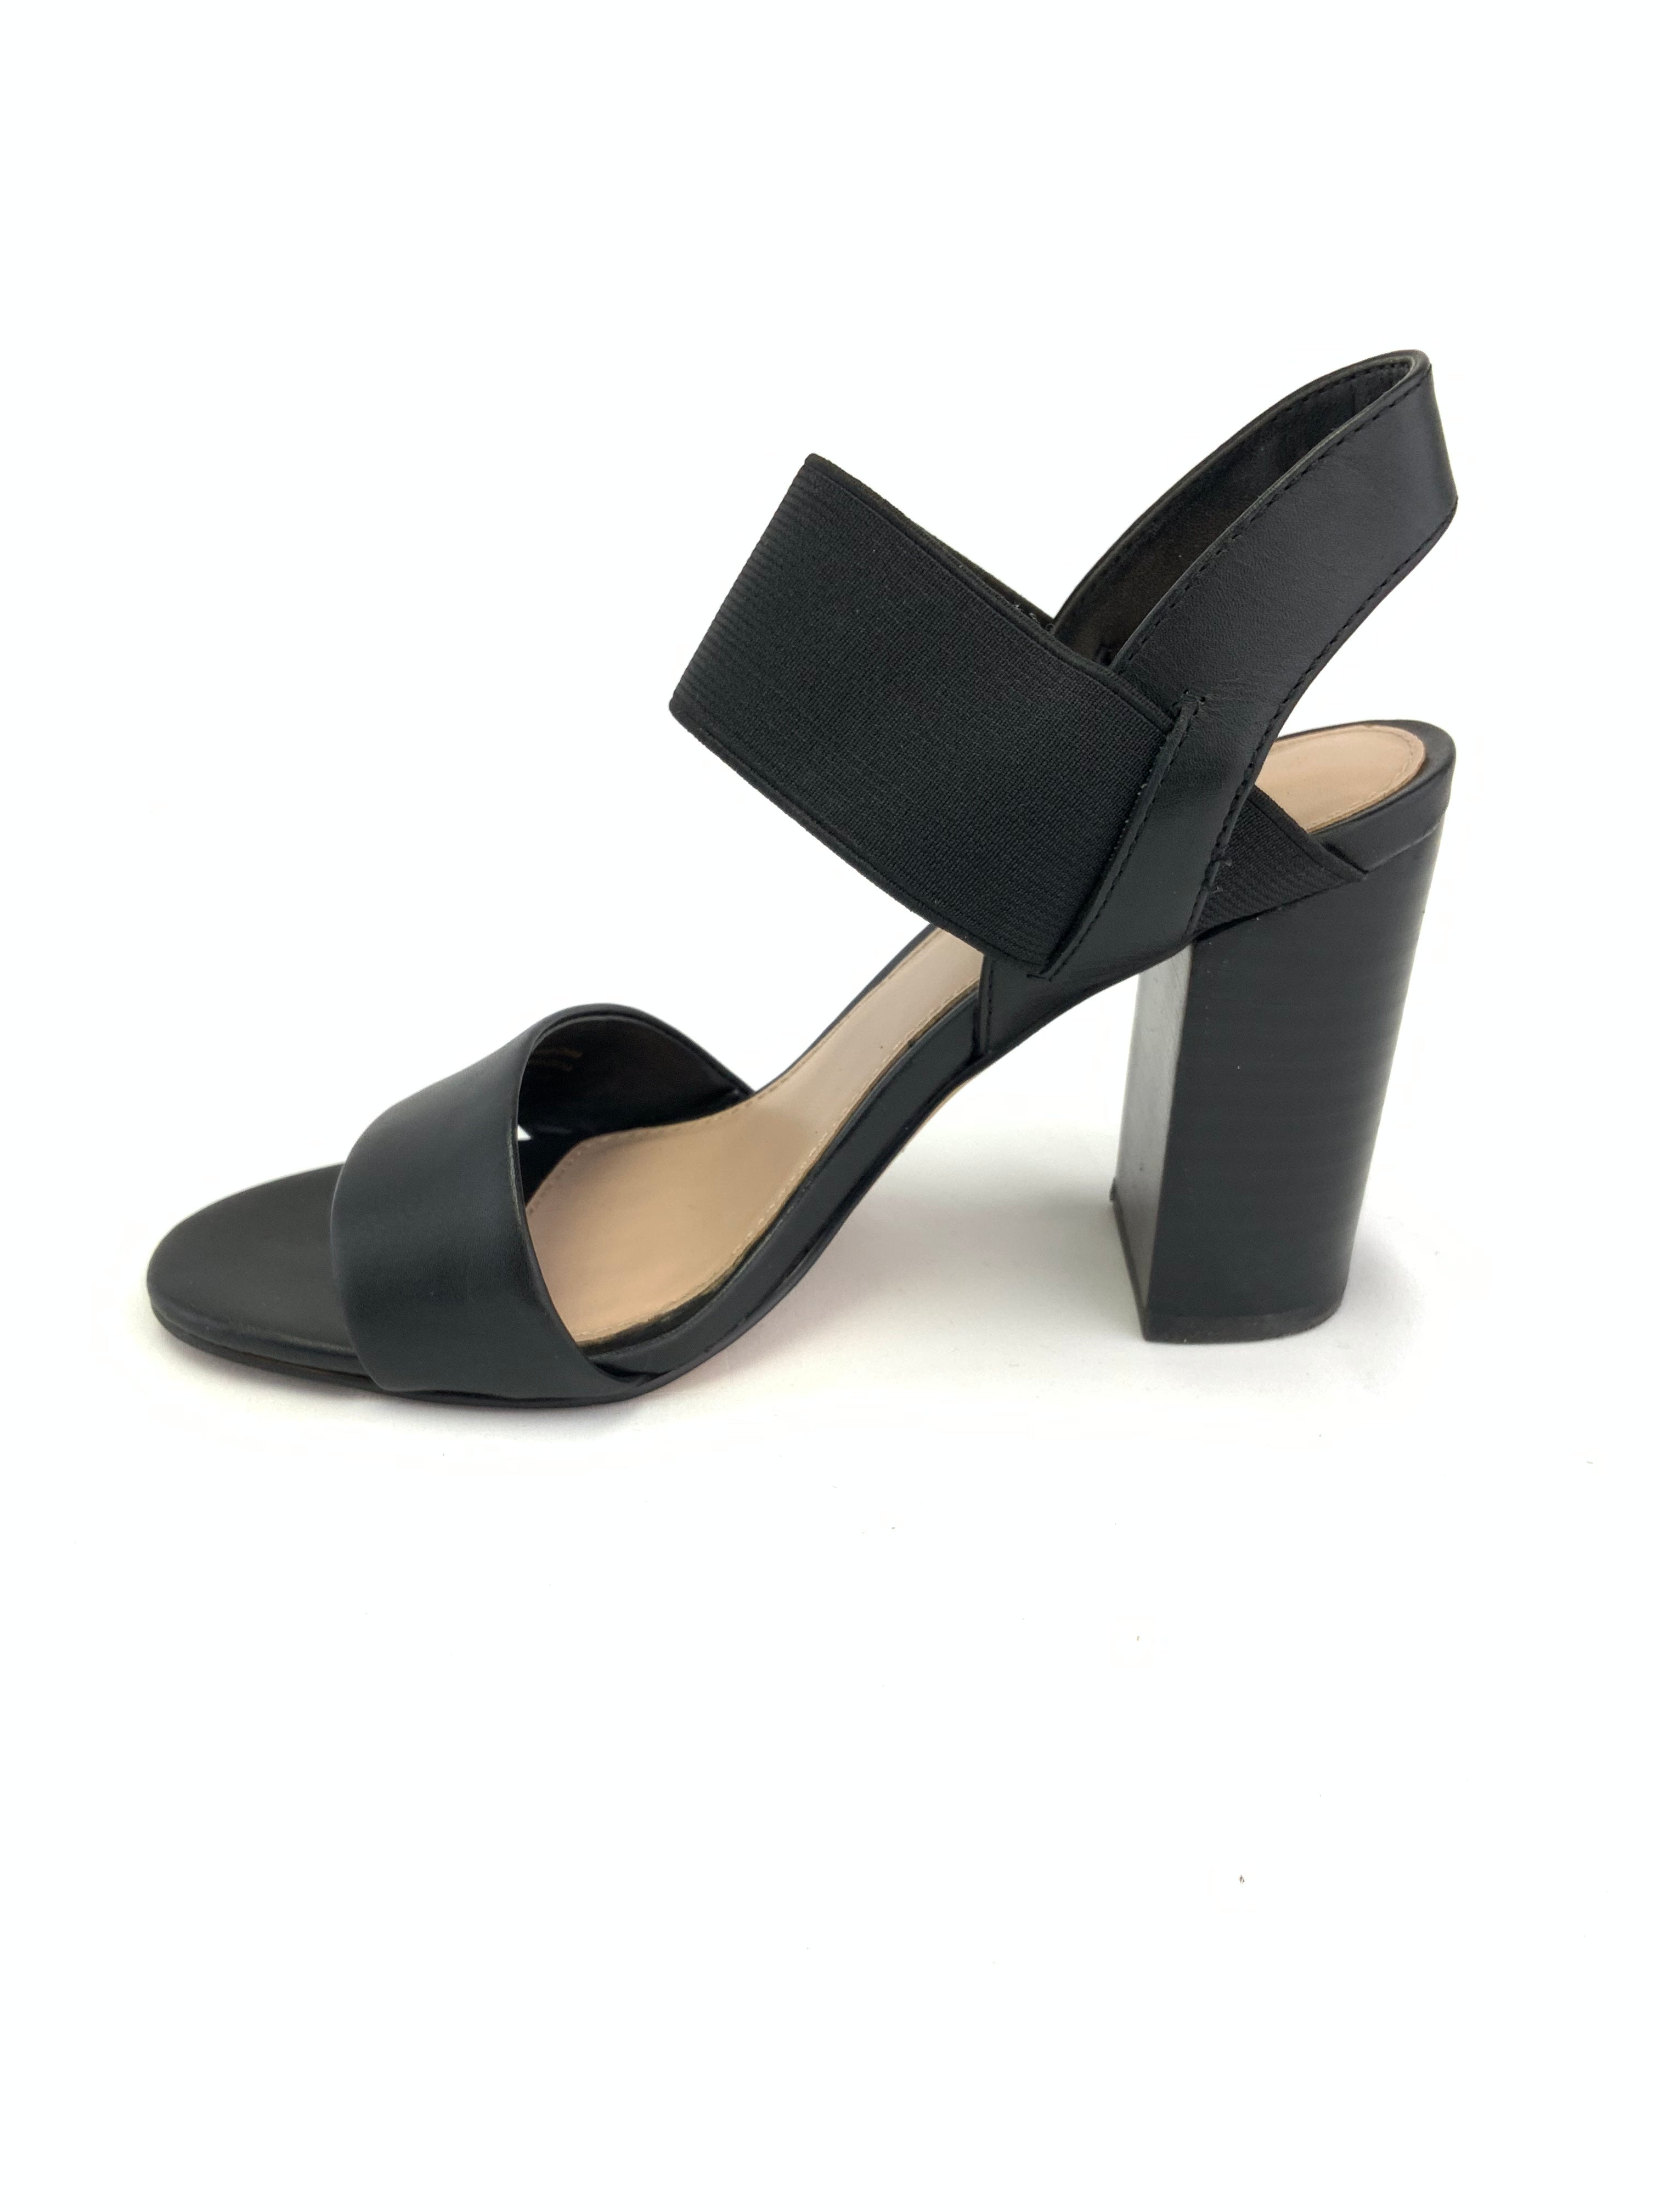 Aldo casual block heel sandals in tan | ASOS | Heels, Casual block heels, Block  heels sandal